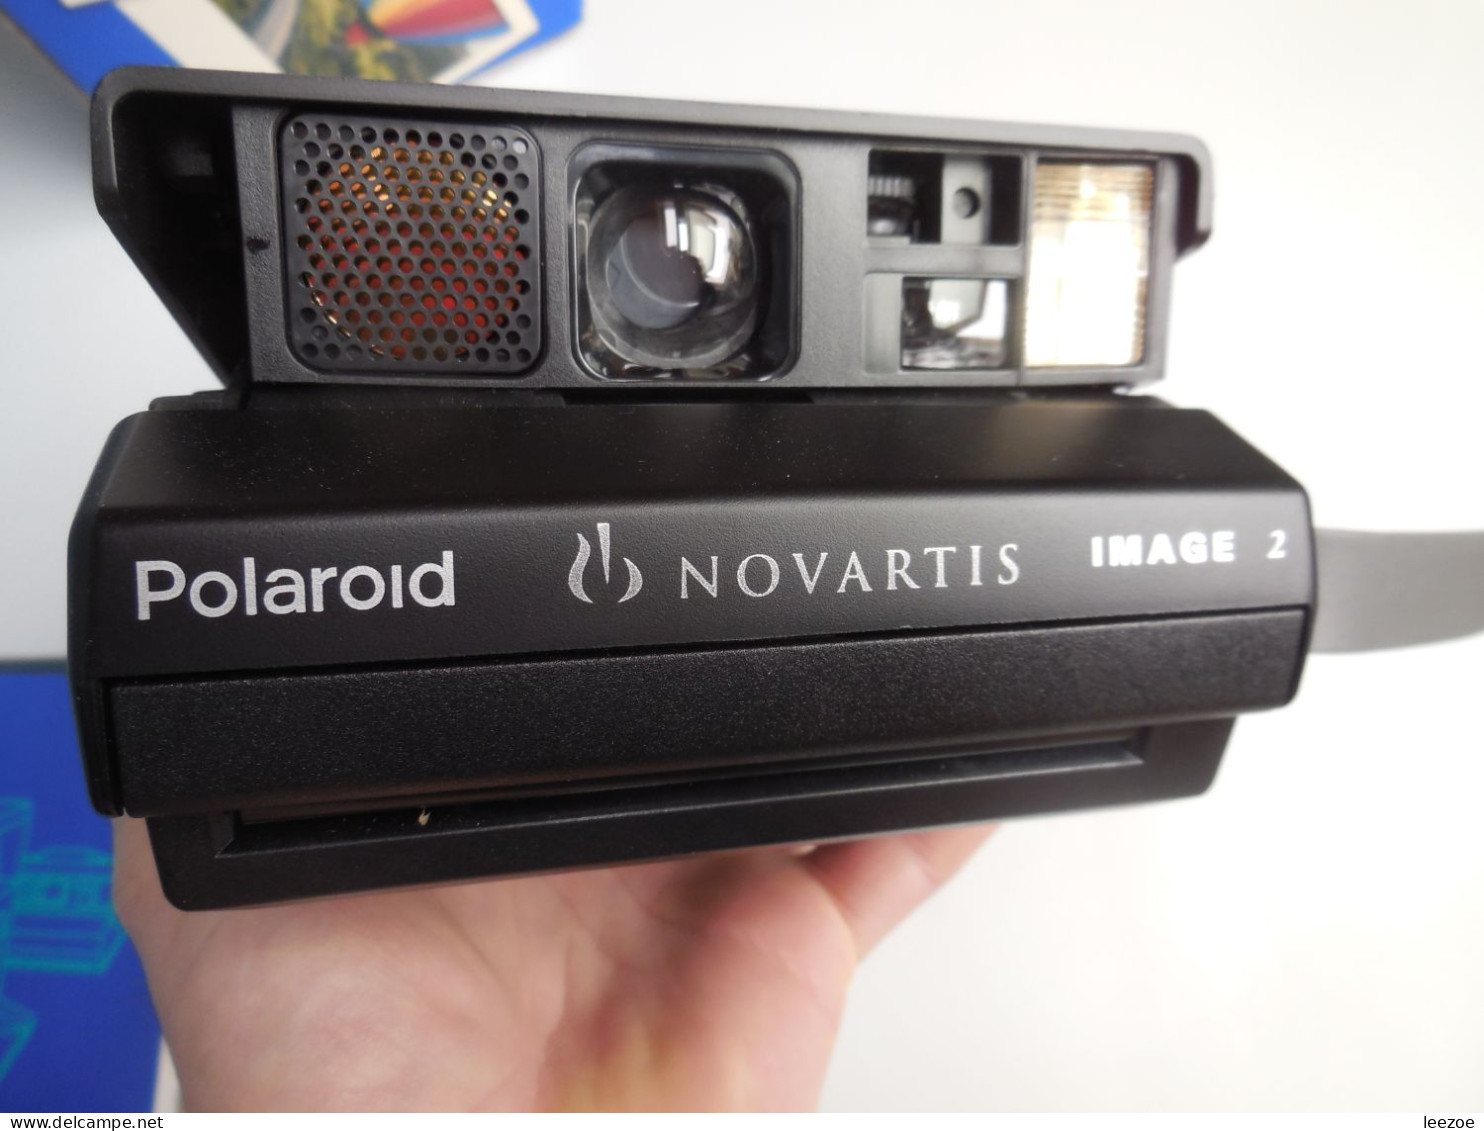 appareil photo POLAROID IMAGE 2 NOVARTIS (laboratoire médical) testé sans film flash OK, RARE (ref23.5.pola2)